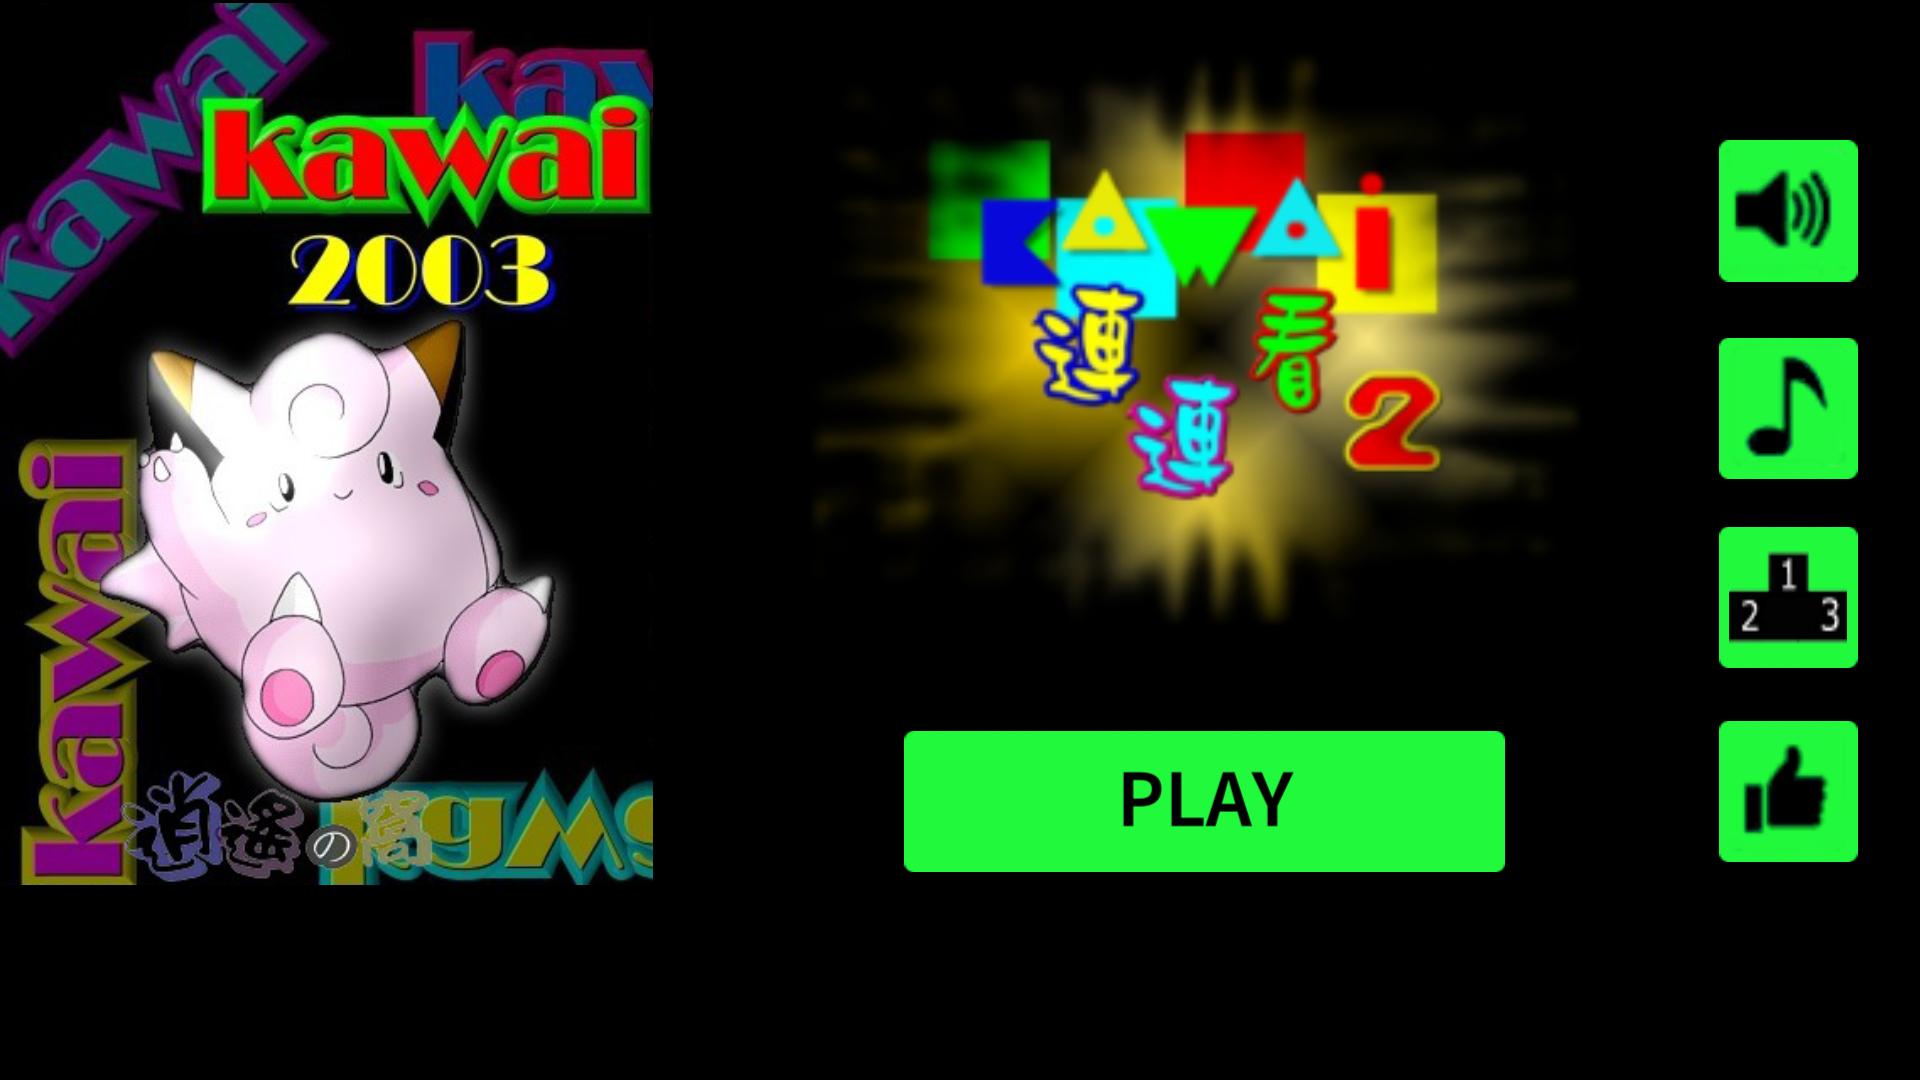 Pikachu kawai 2003 for Android - APK Download